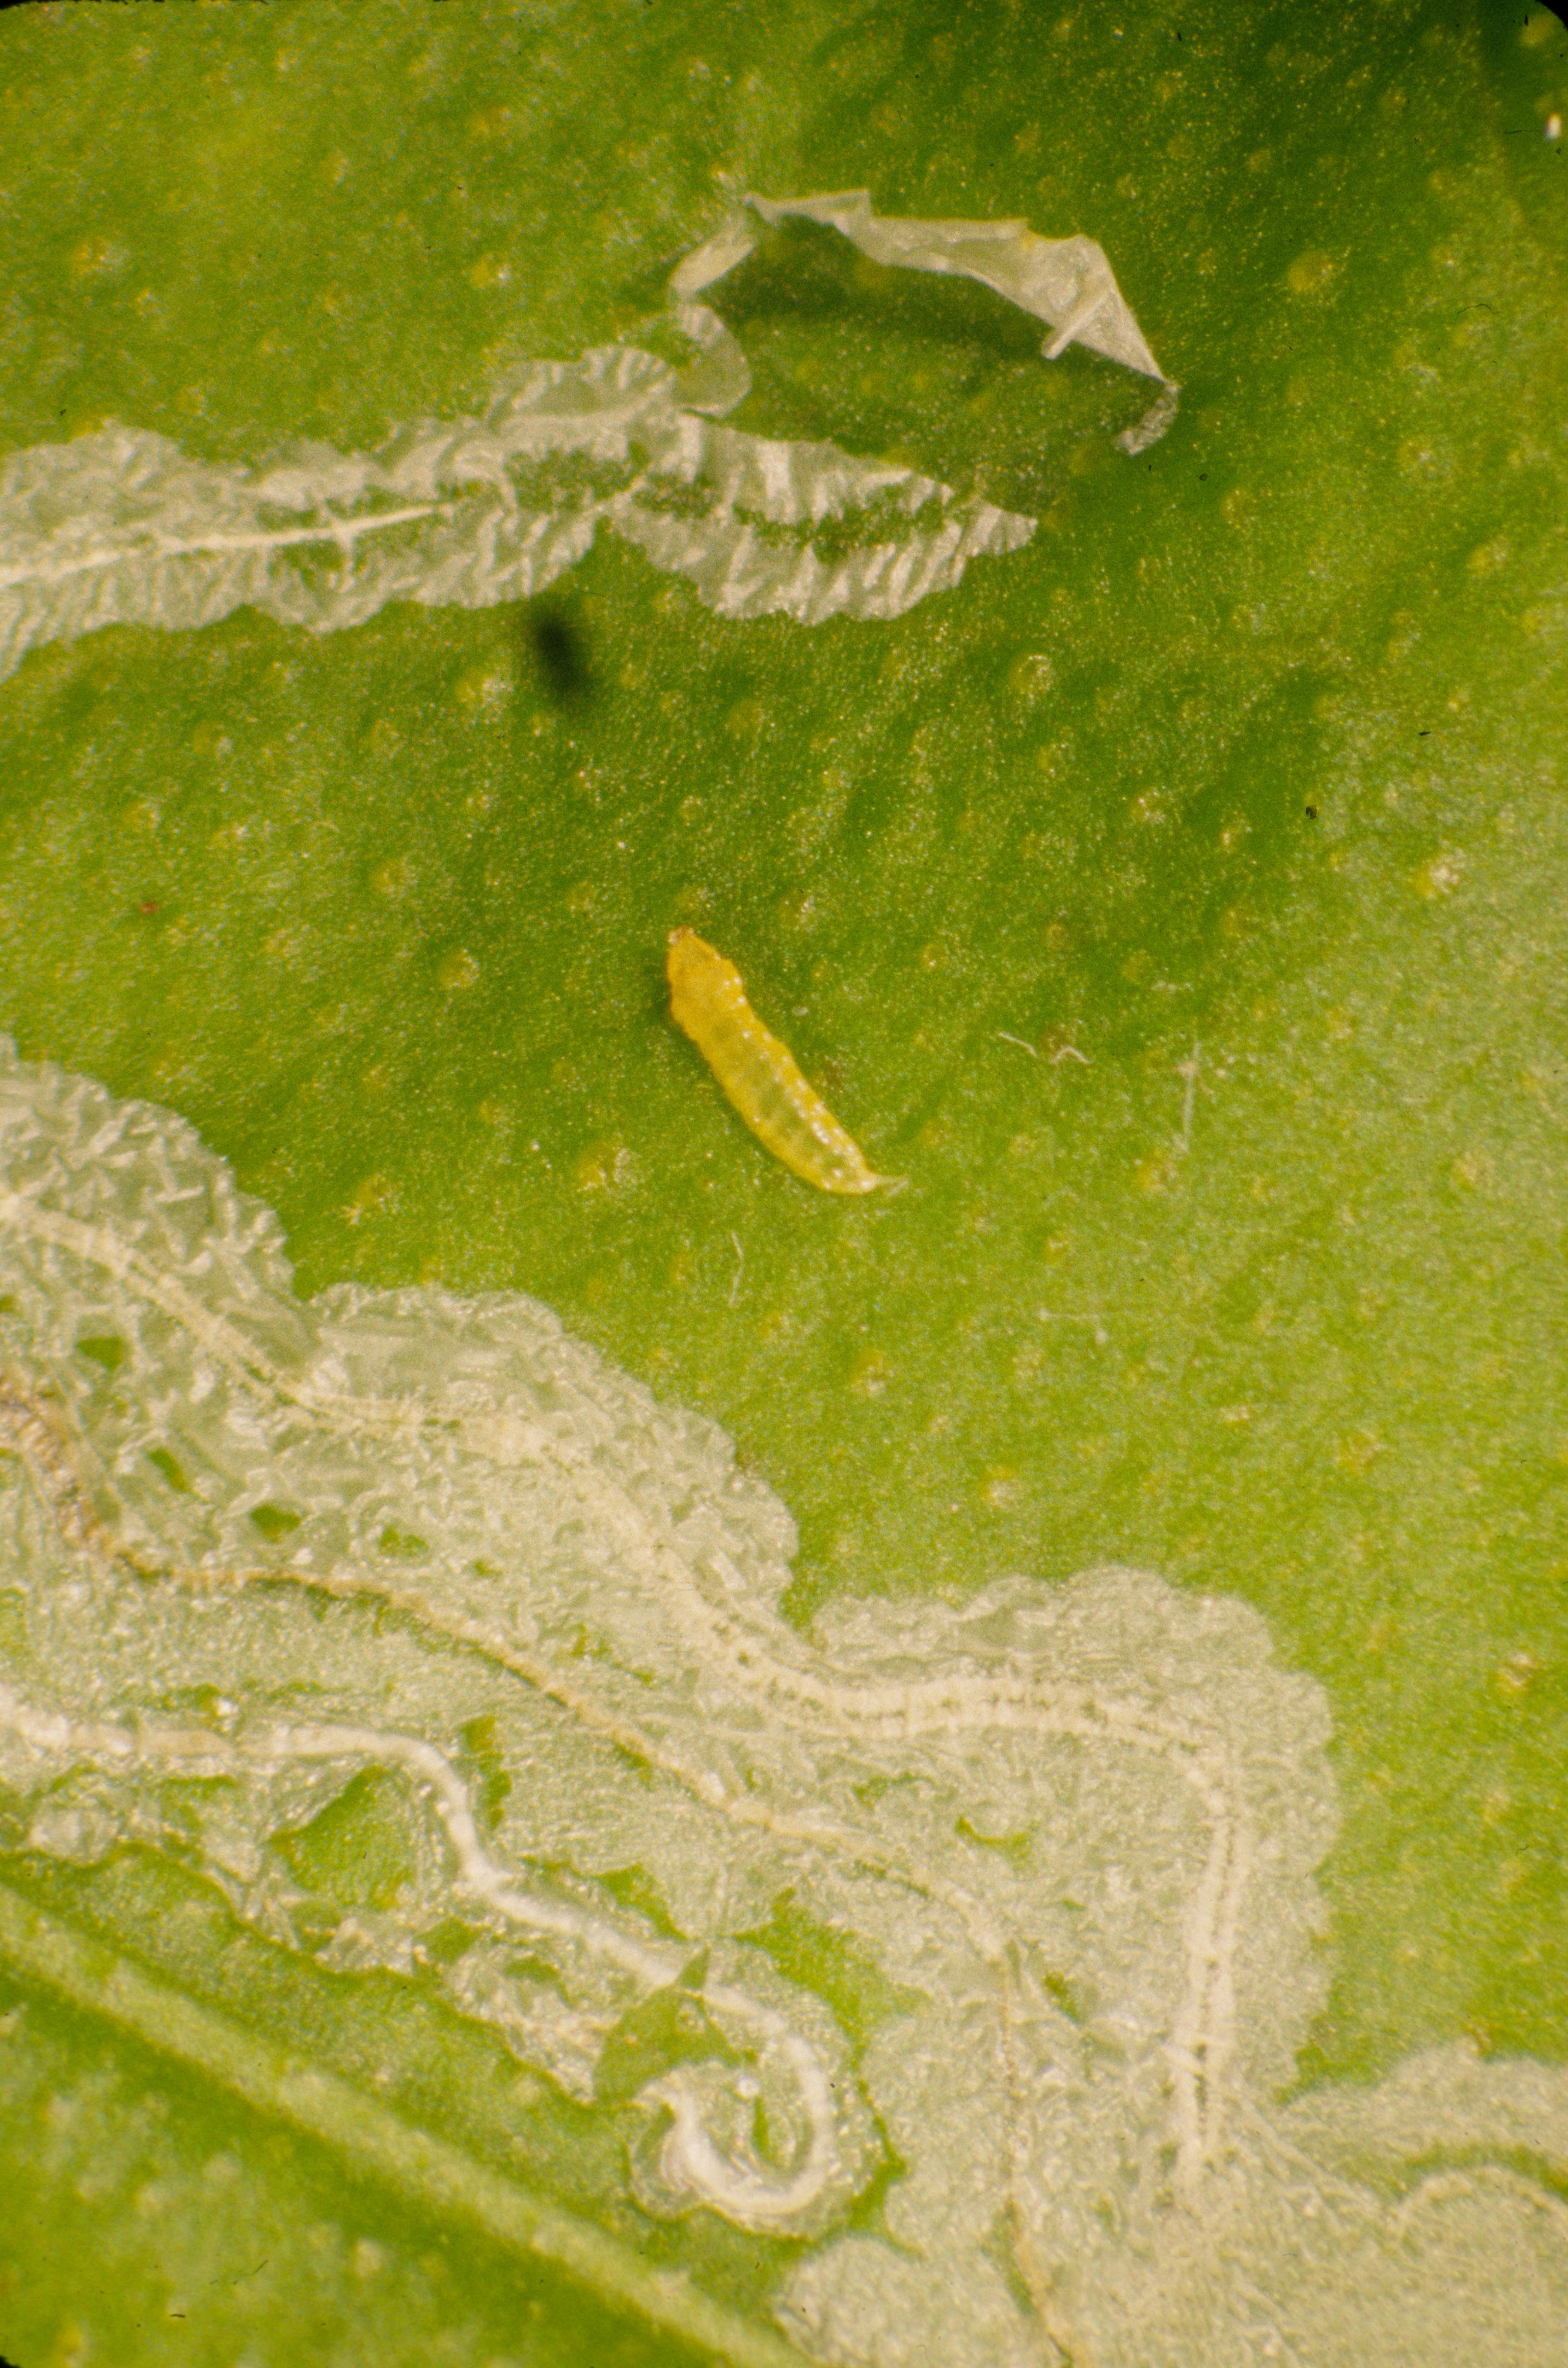 Figure 6. Citrus leaf miner (Phyllocnistis citrella) larvae. Photo: JW Lotz, Florida Department of Agriculture and Consumer Services, Bugwood.org.